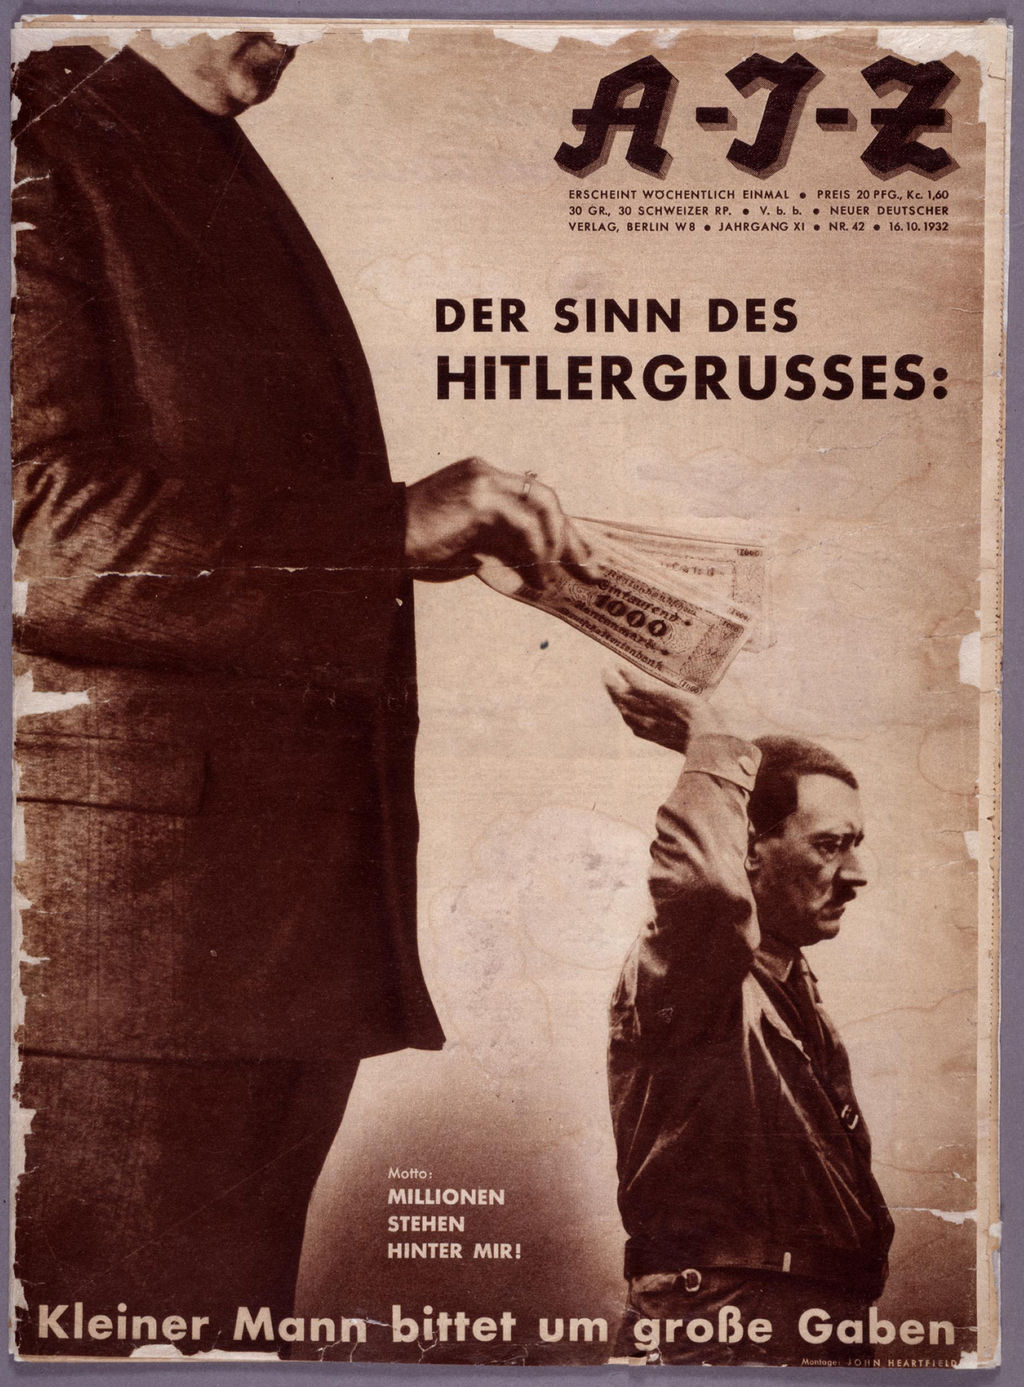 Zeitschrift: Heartfield, John "Der Sinn des Hitlergrusses", 1932